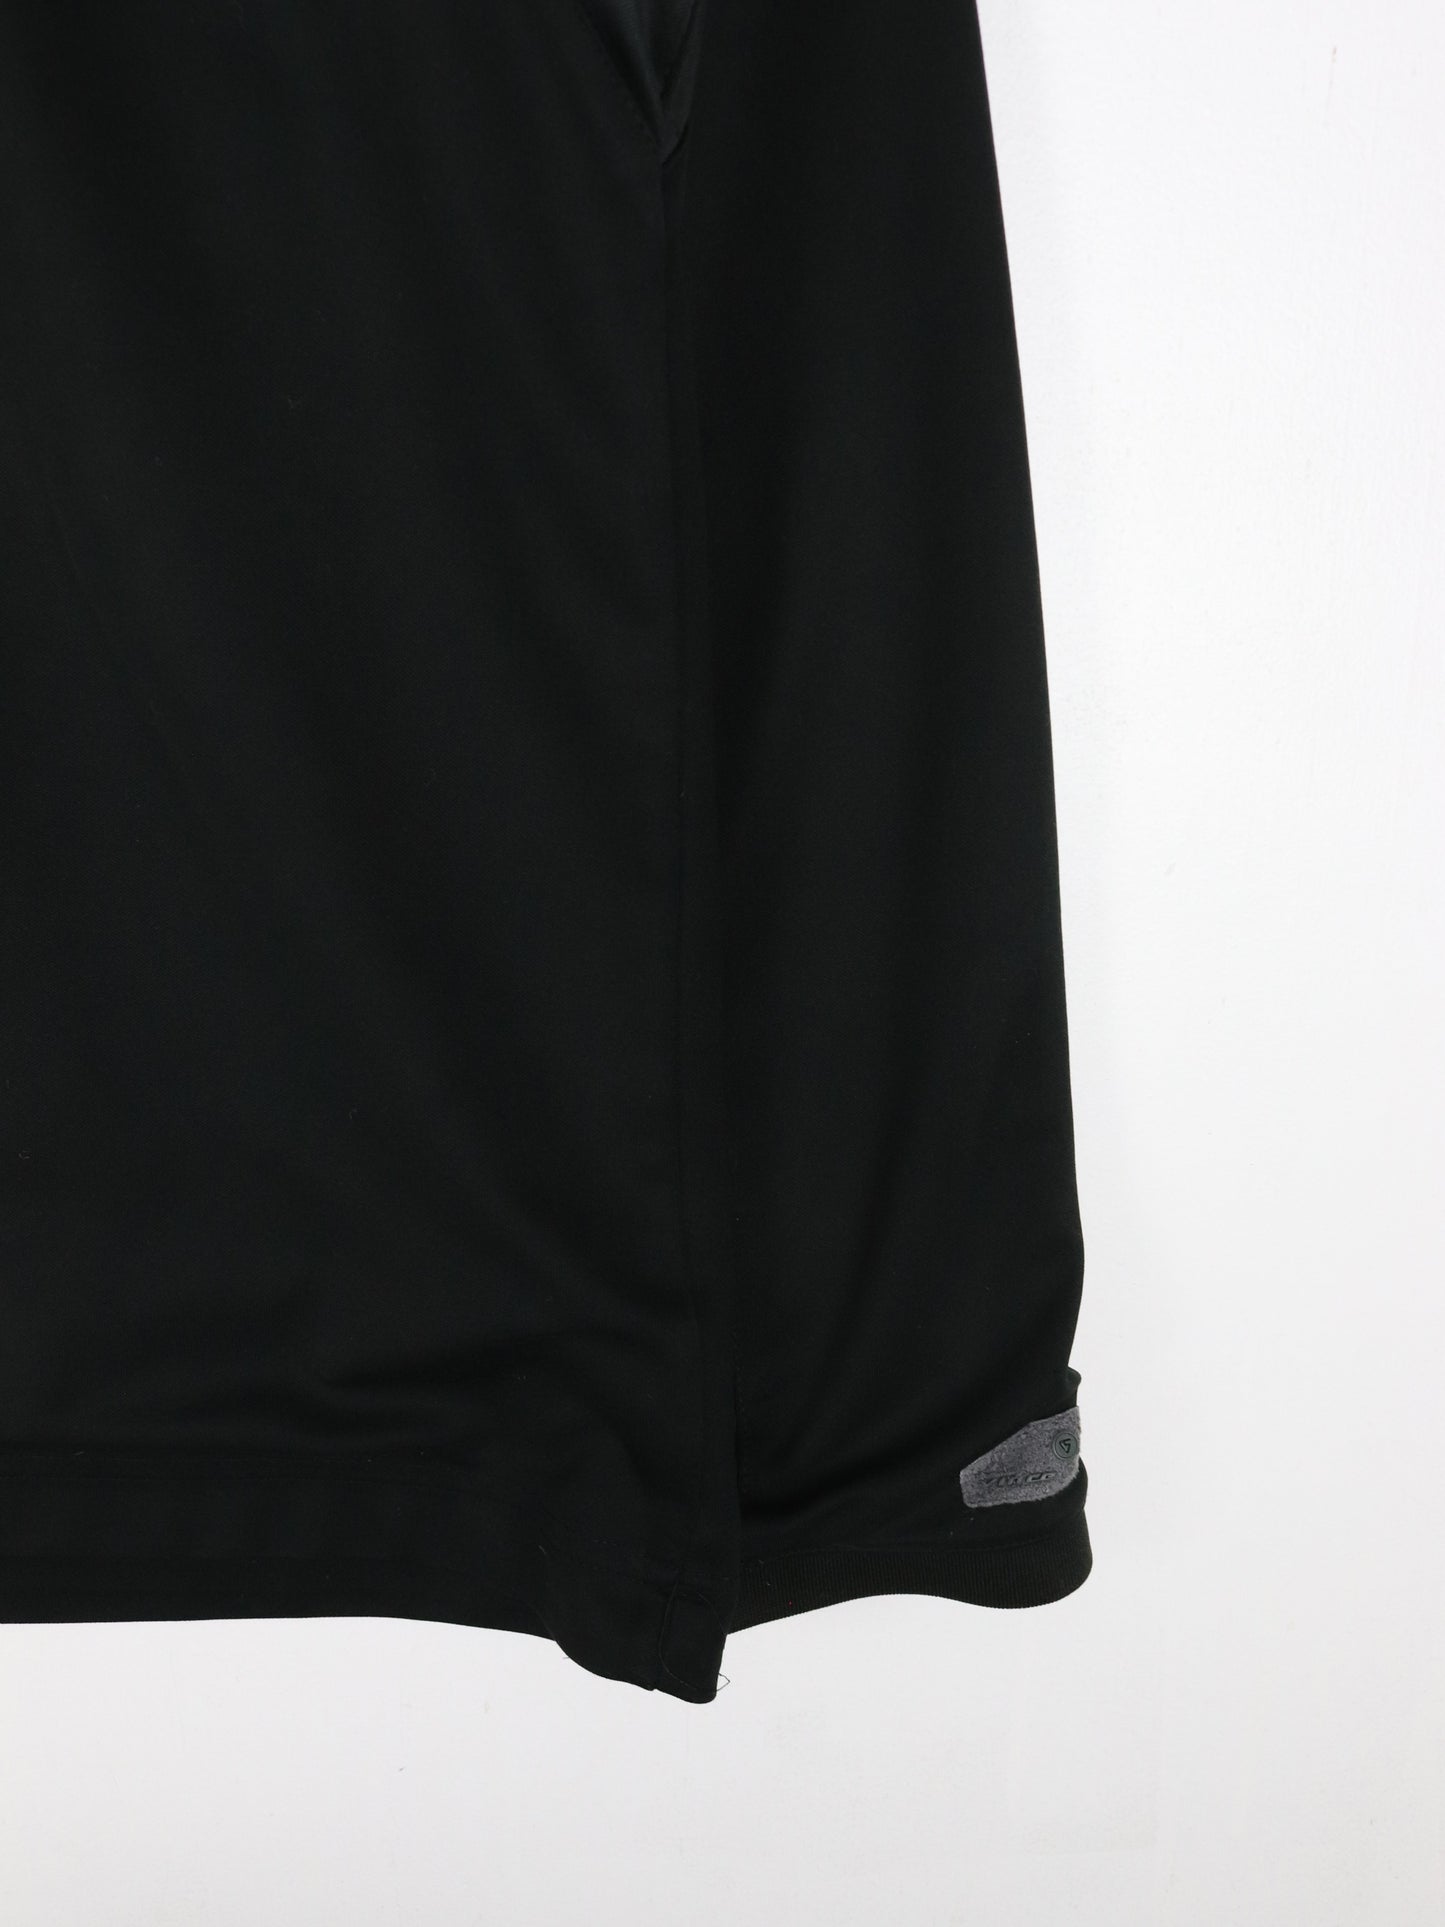 Nike Vince Carter Jersey Mens Large Black Long Sleeve Dri Fit Athletic